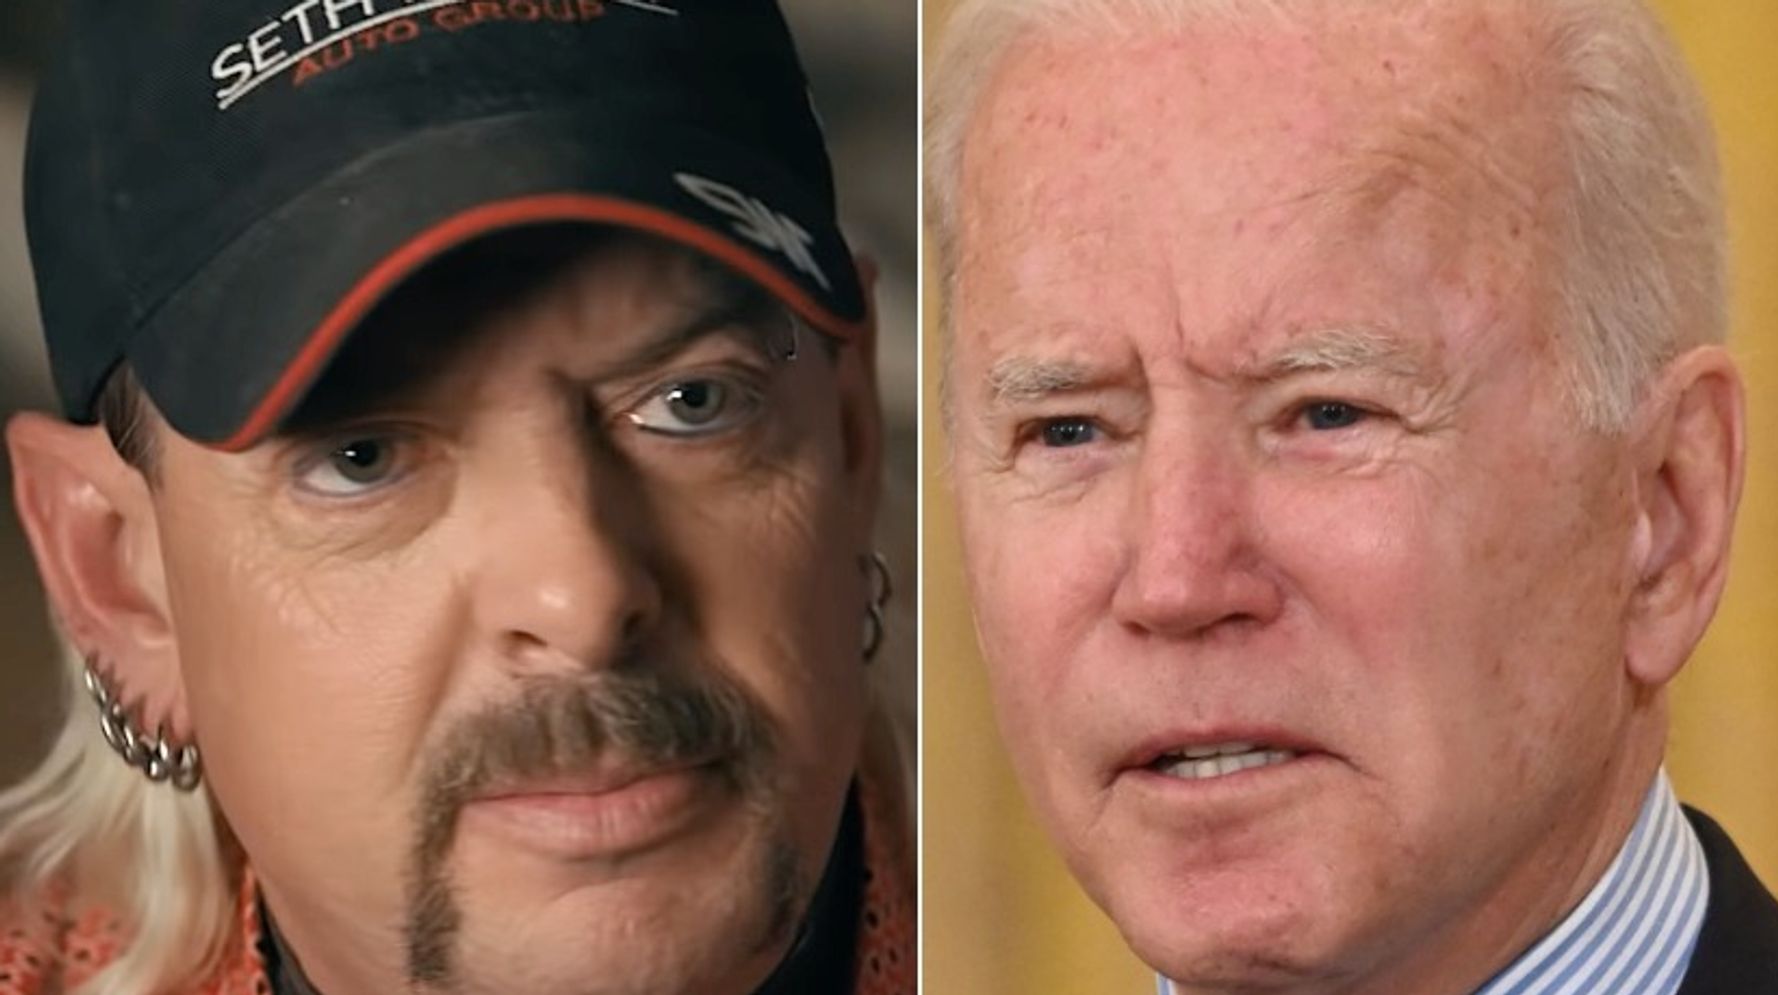 Joe Exotic Makes New Claims In Desperate Plea For Pardon From Joe Biden